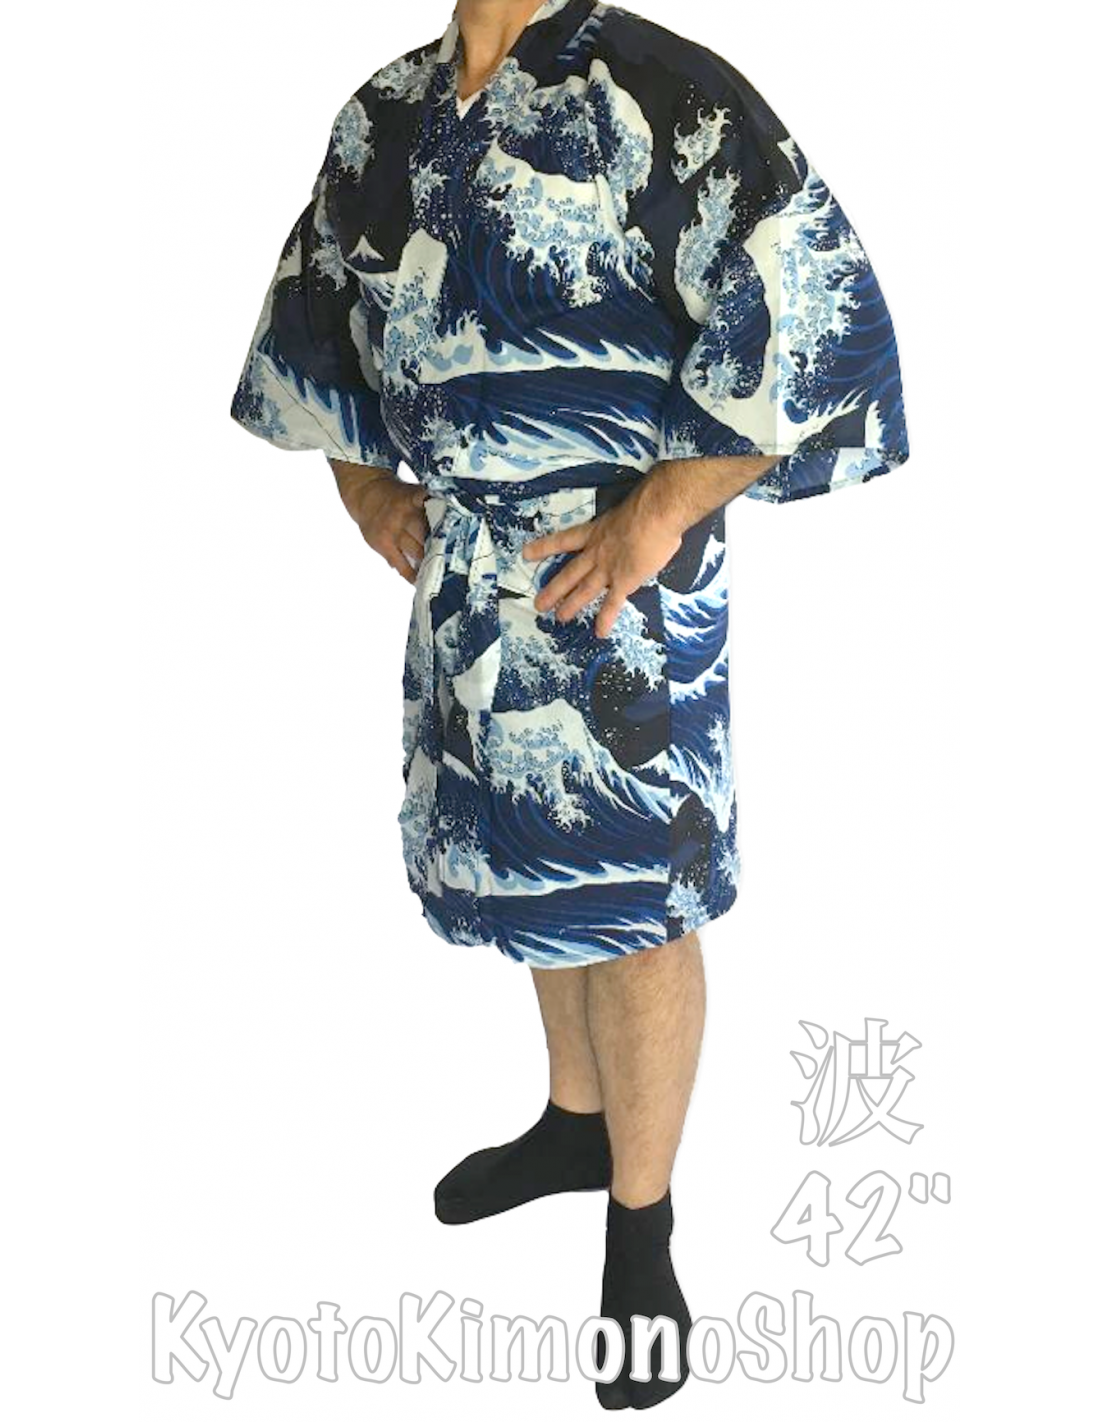 Black white Japan Tradition Japanese Kimono Men male Yukata Clothing Vest  Top Coat Skirt for film Cosplay Bathrobe Show- Material : polyesterContent  : Only Coat and